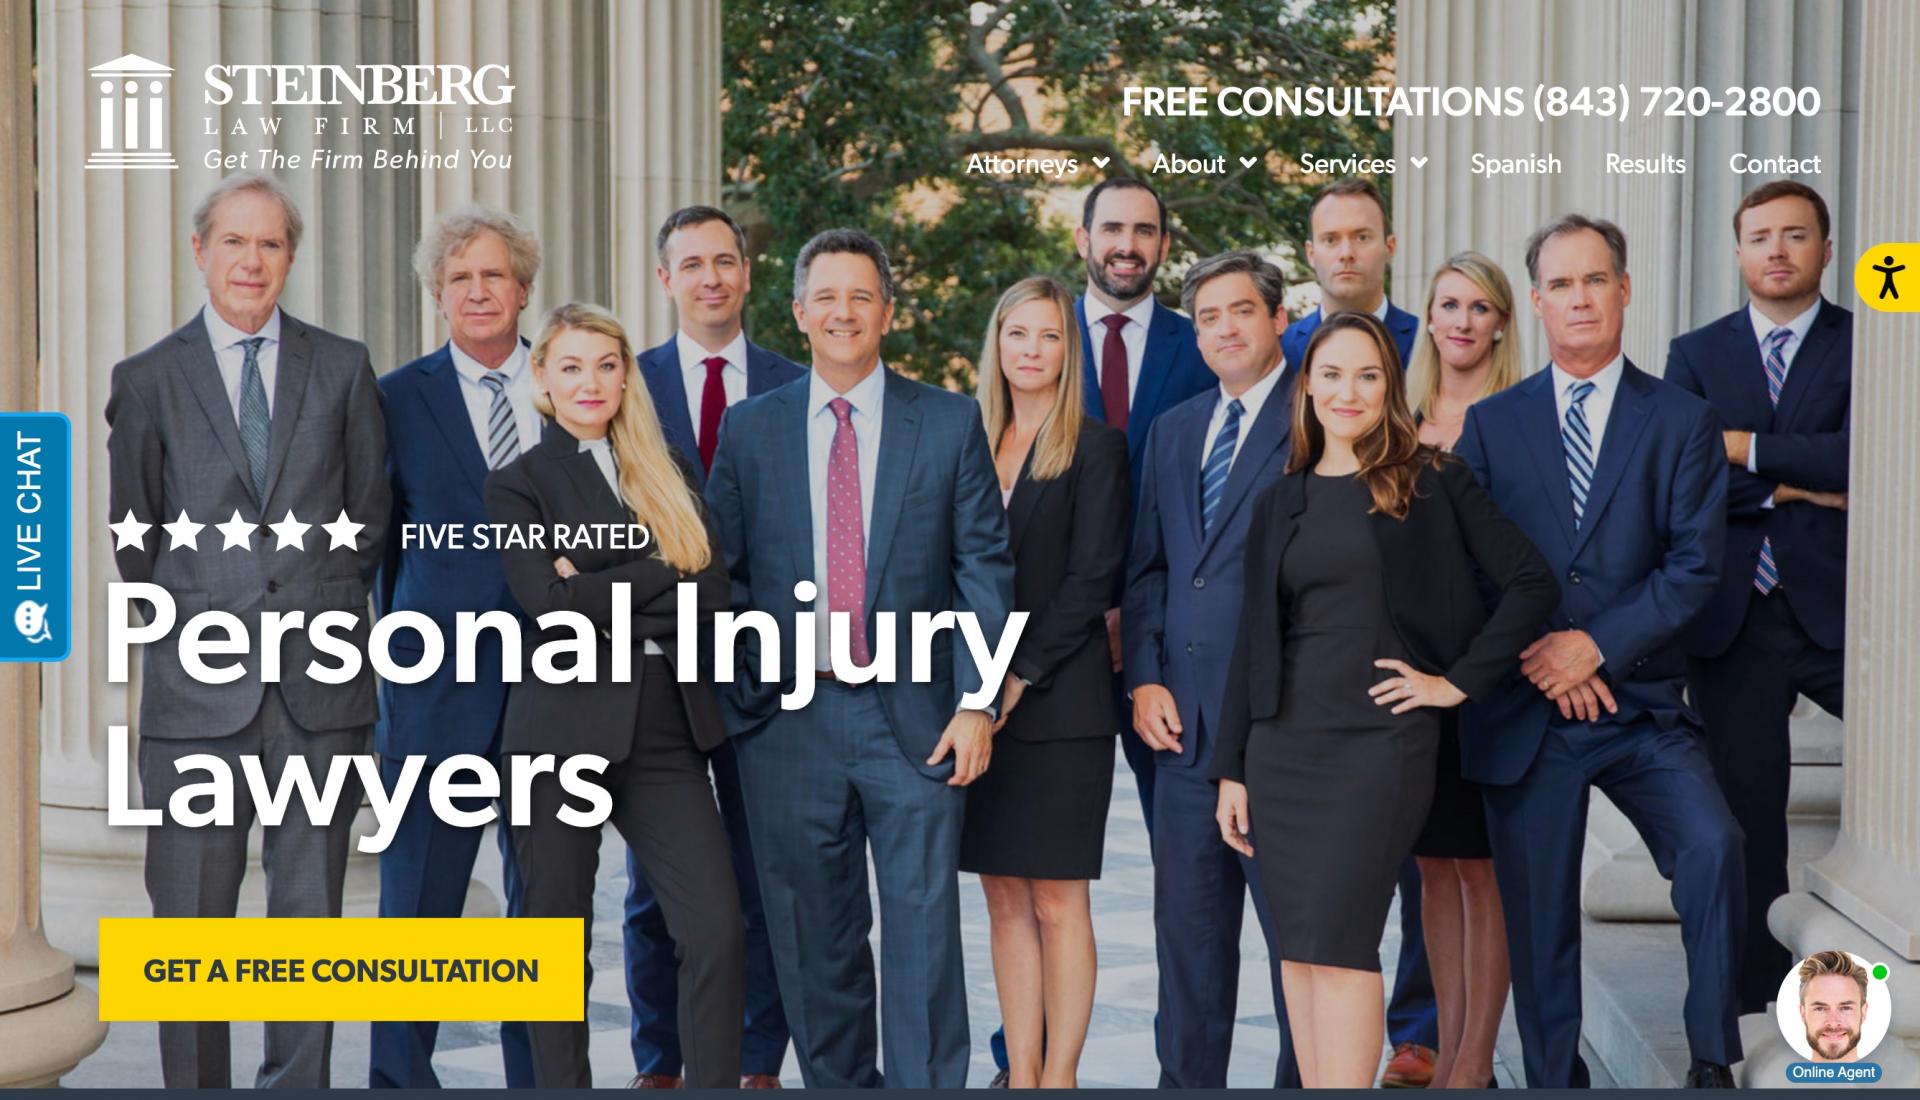 Vega Digital Awards Winner - Steinberg Law Firm - South Carolina Personal Injury Lawyers, Custom Legal Marketing